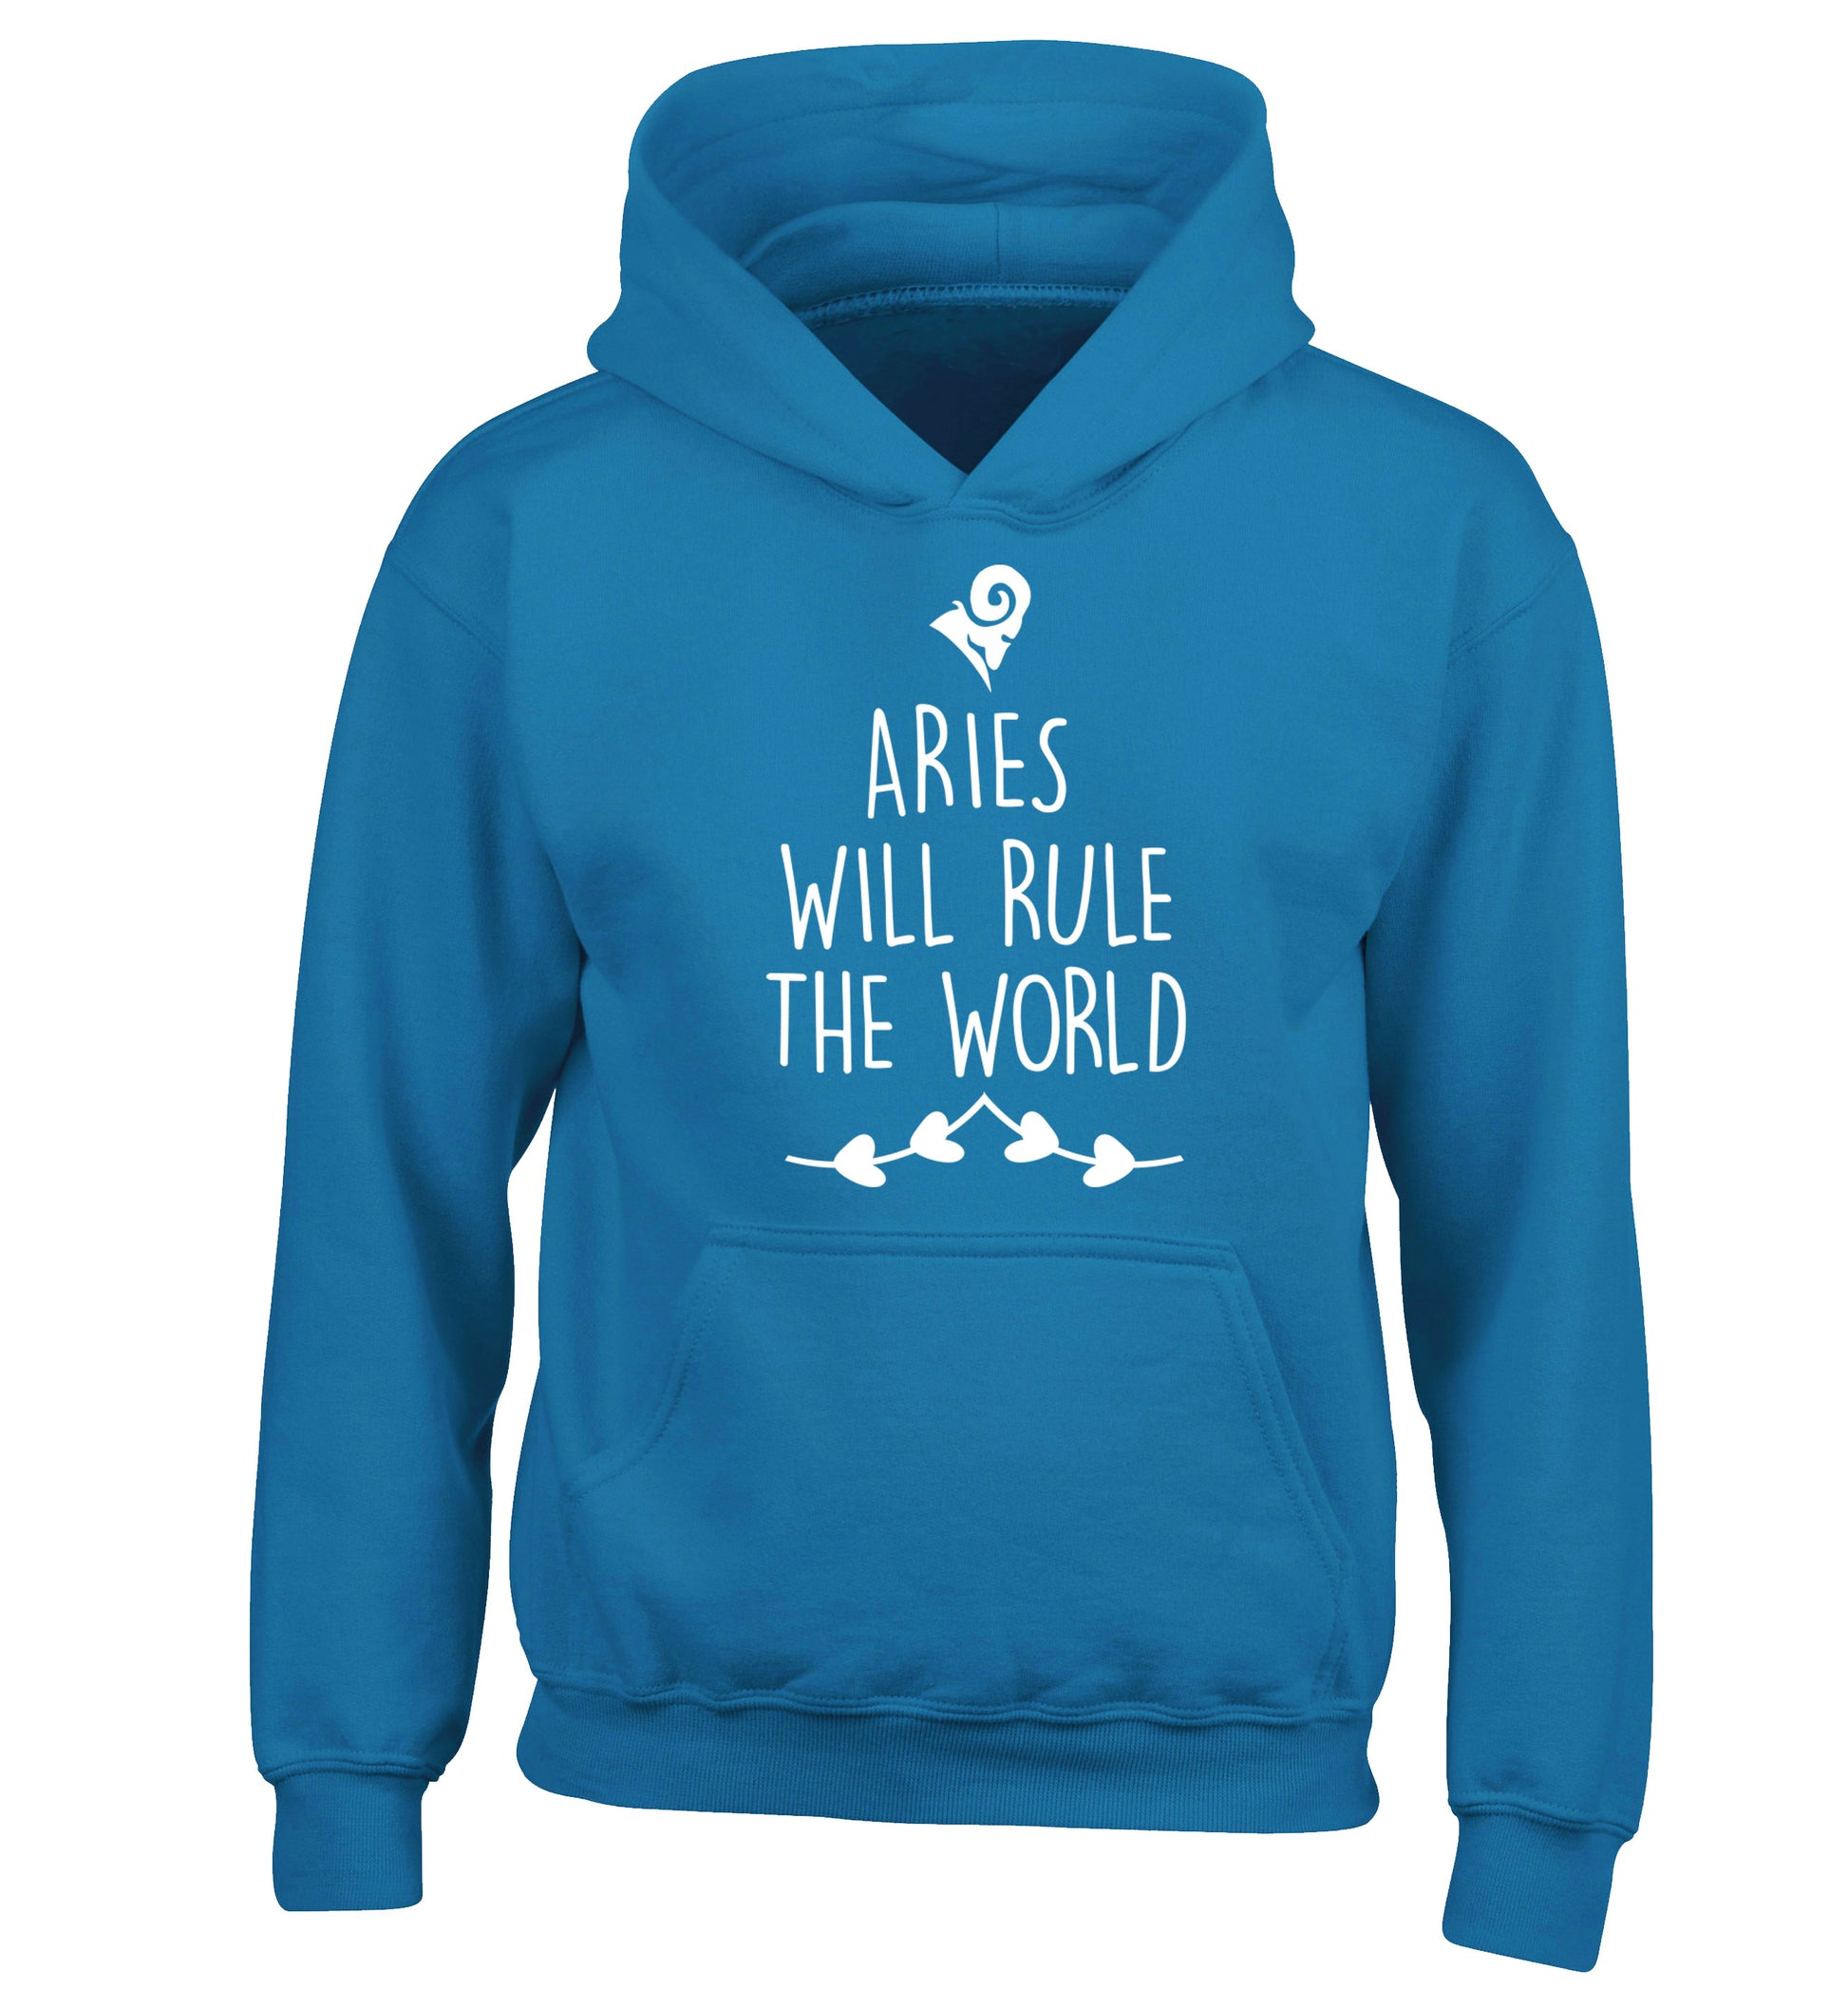 Aries will rule the world children's blue hoodie 12-13 Years